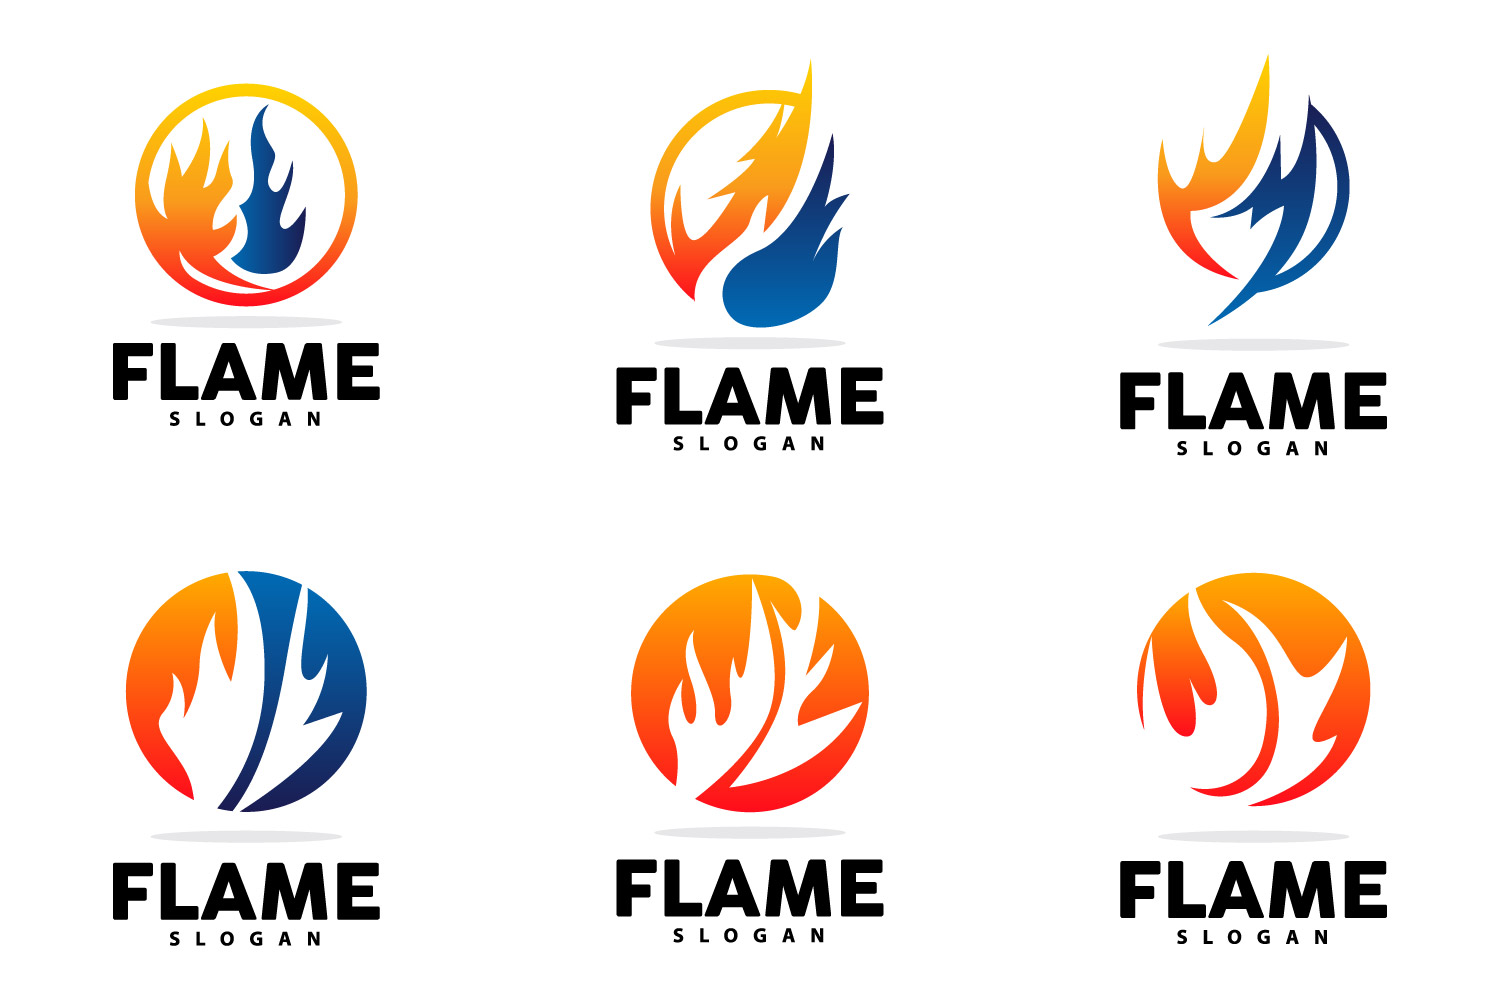 Red Flame Logo Burning Fire VectorV6